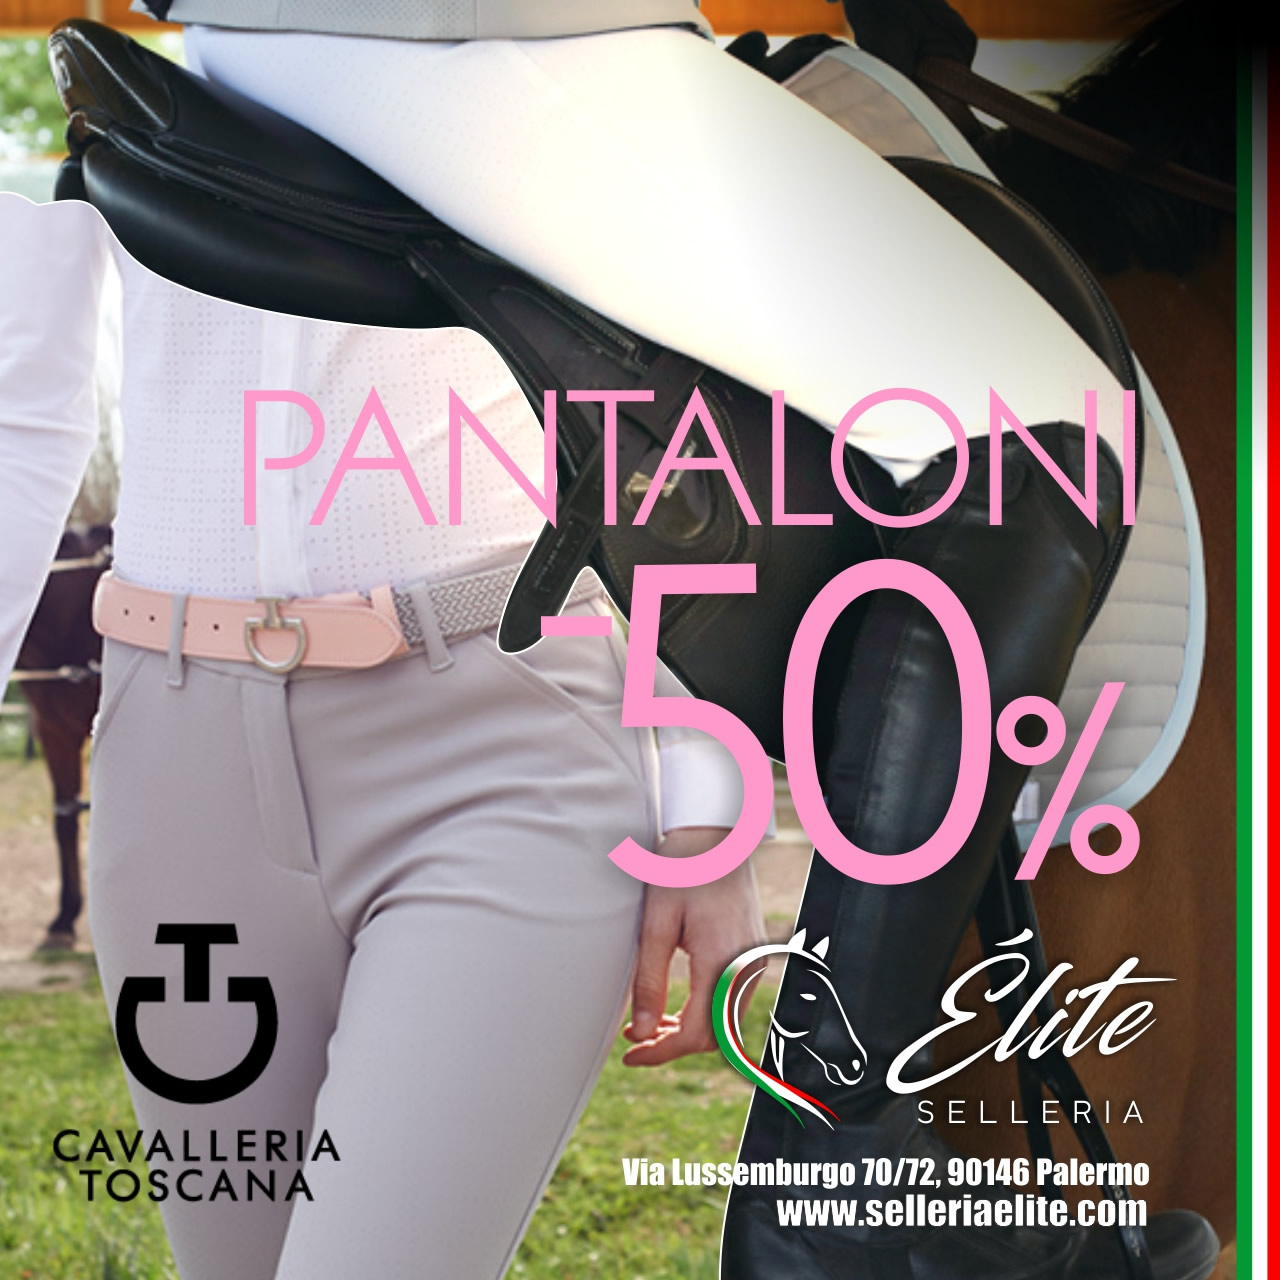 Pantaloni Cavalleria Toscana -50%, selleria online Élite del cavallo, Palermo